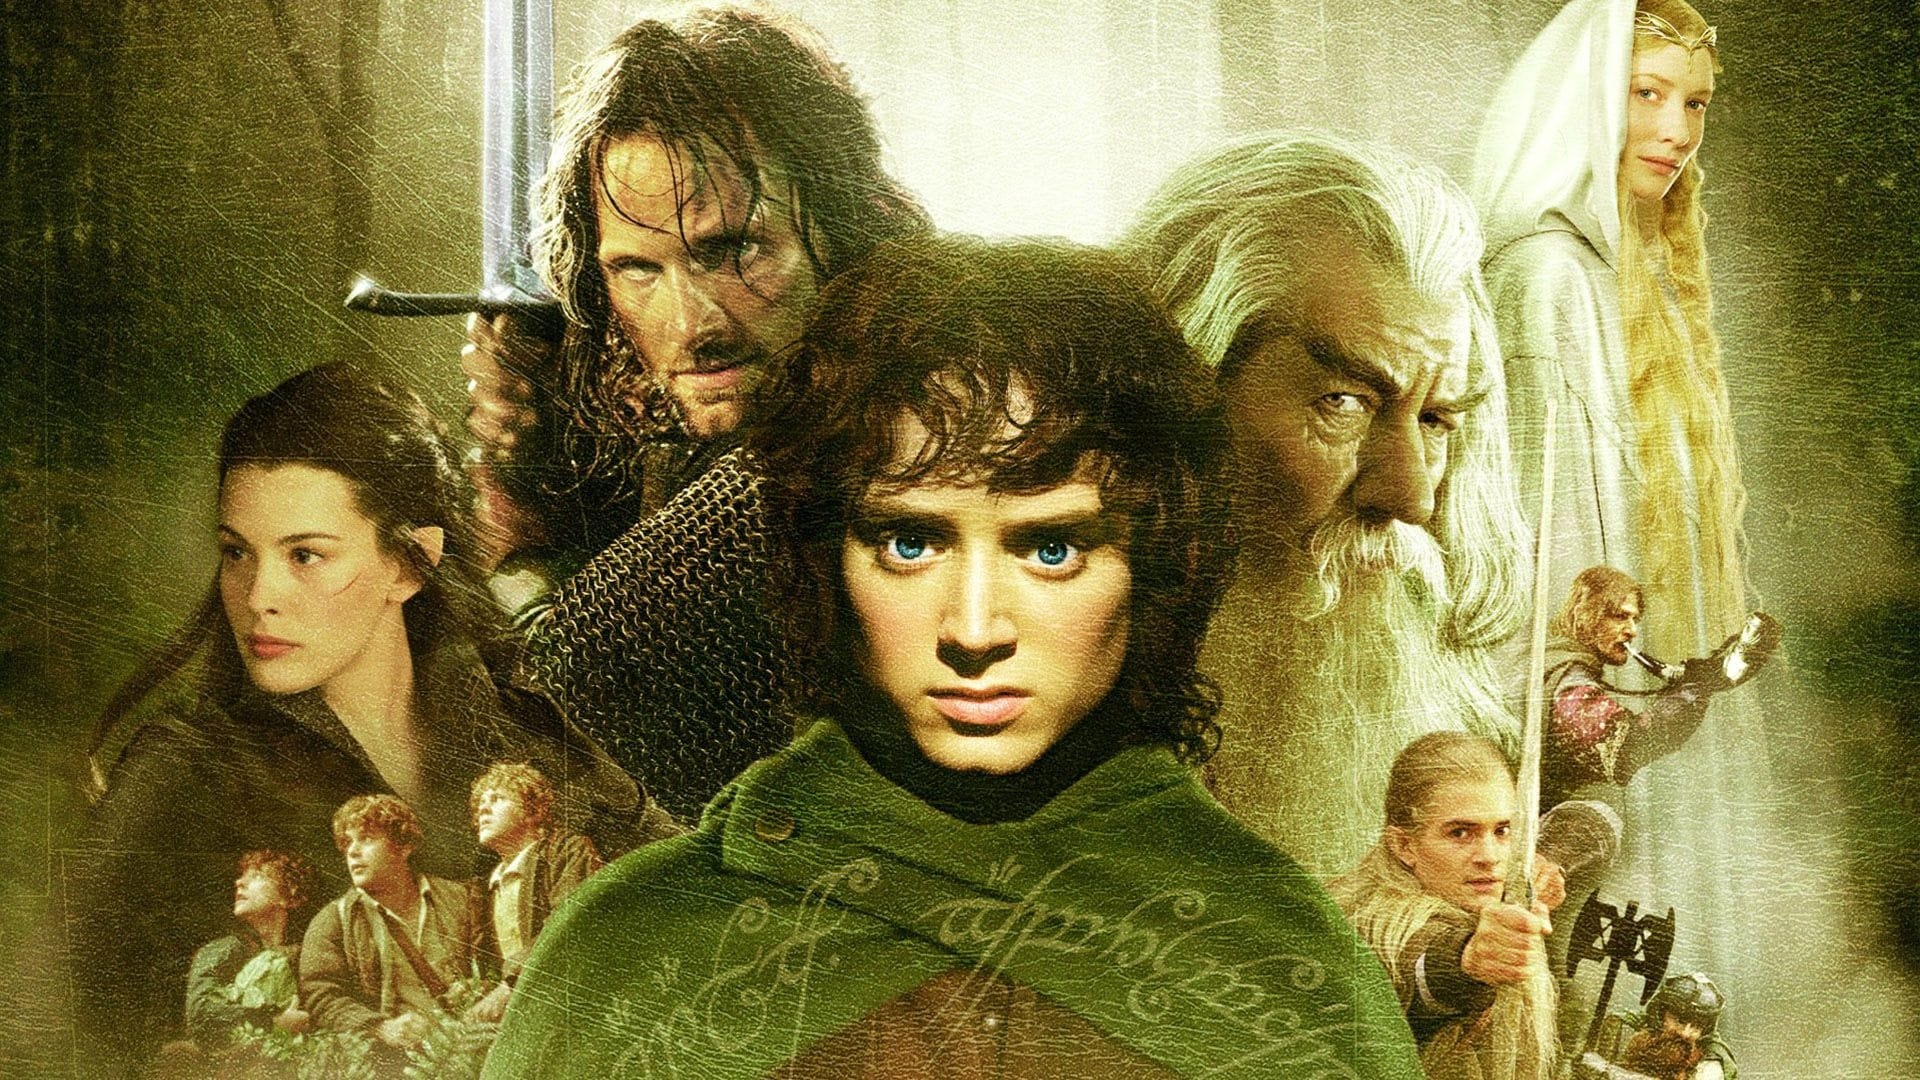 Lord of the Rings, Windows theme, Epic fantasy, 1920x1080 Full HD Desktop